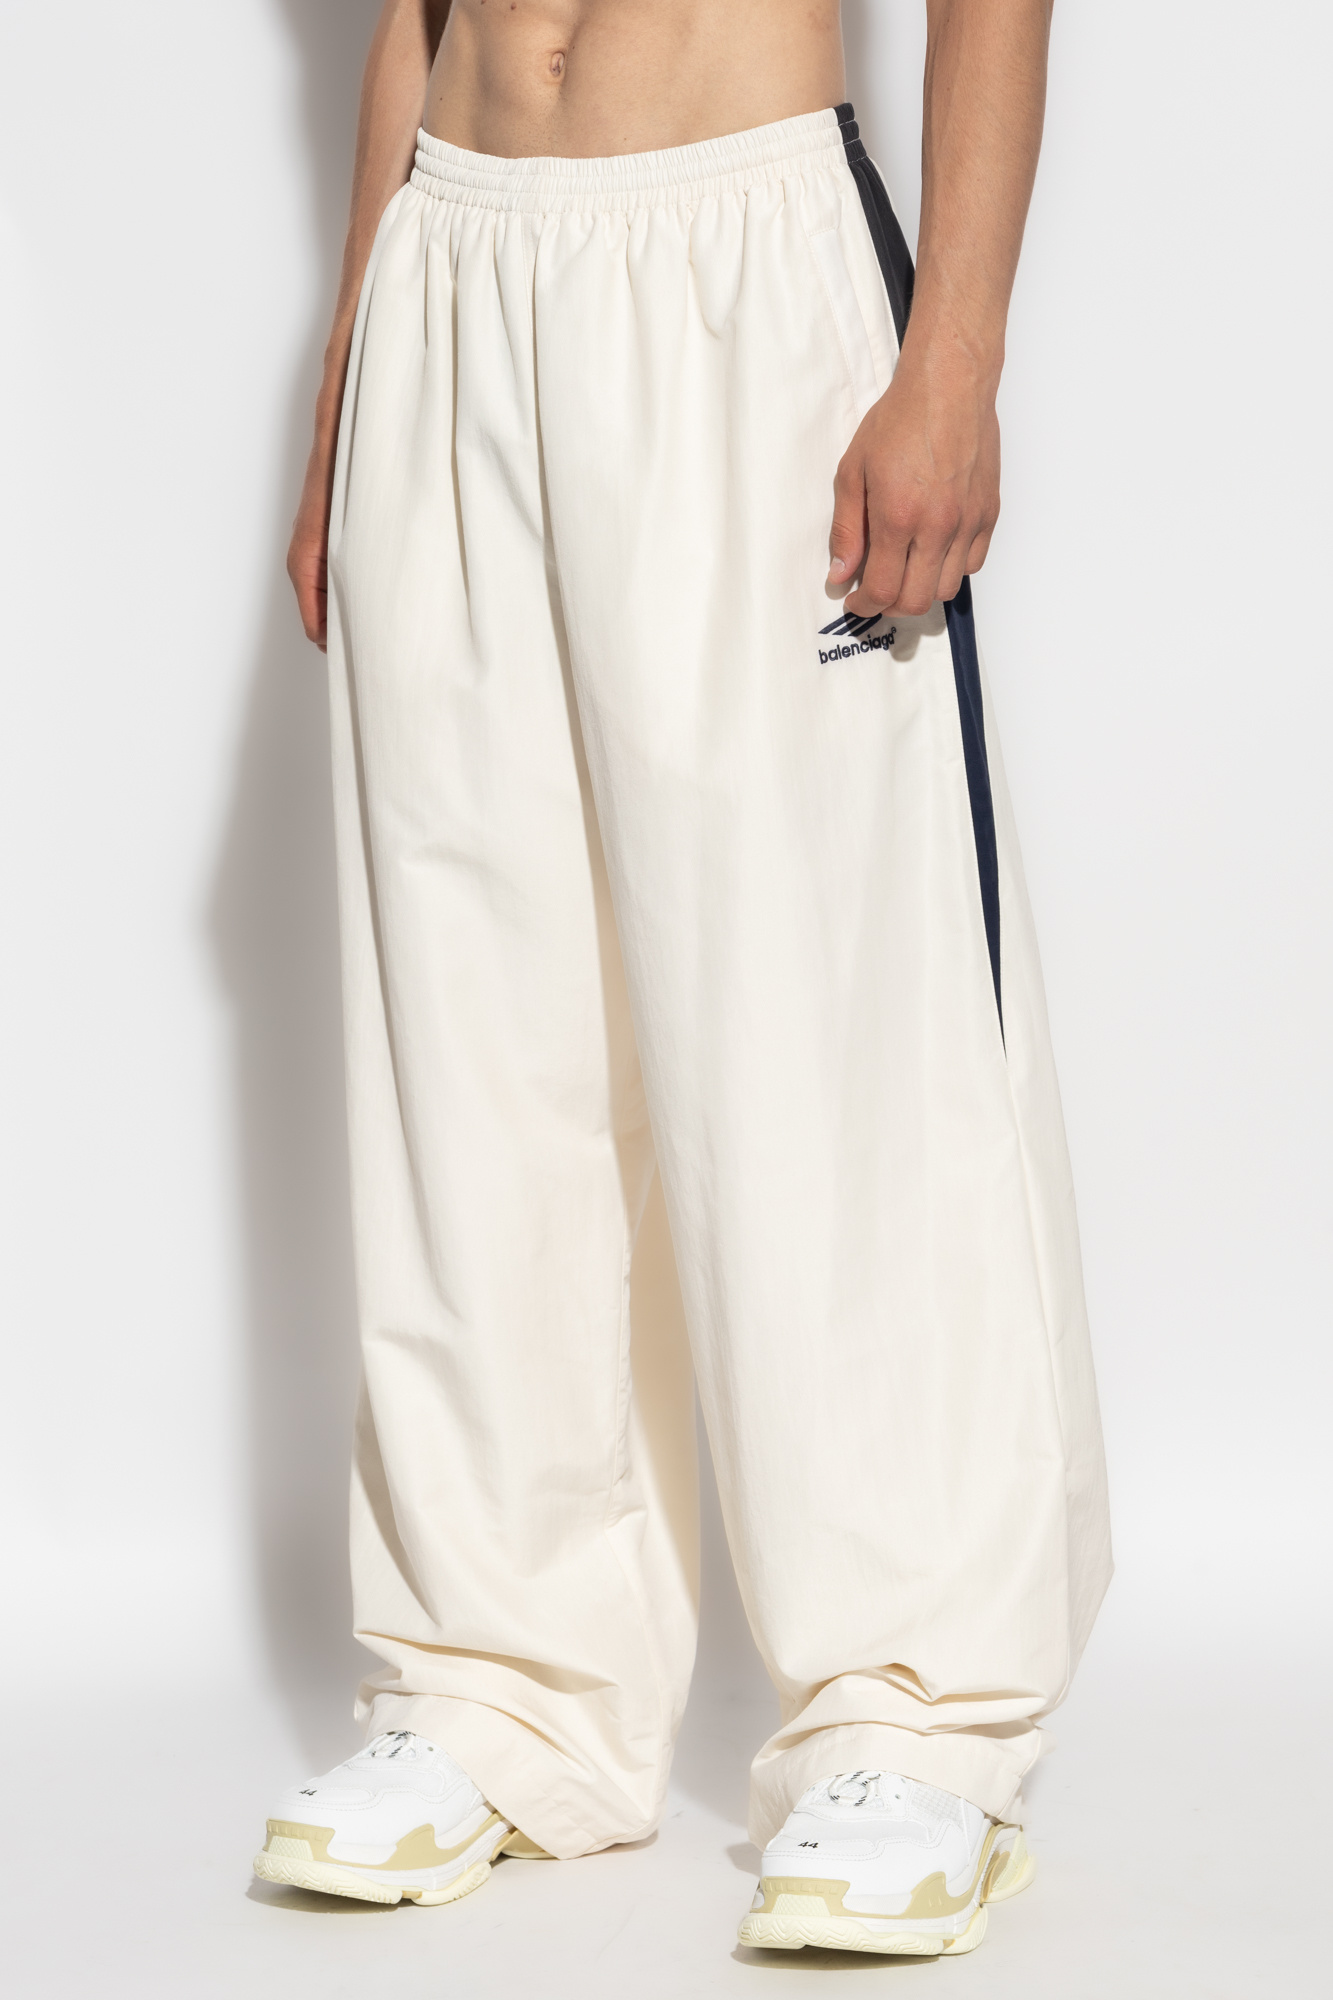 Cream Trousers with logo Balenciaga - Michael Kors Collection Slim Pants  for Women - GenesinlifeShops Bahamas